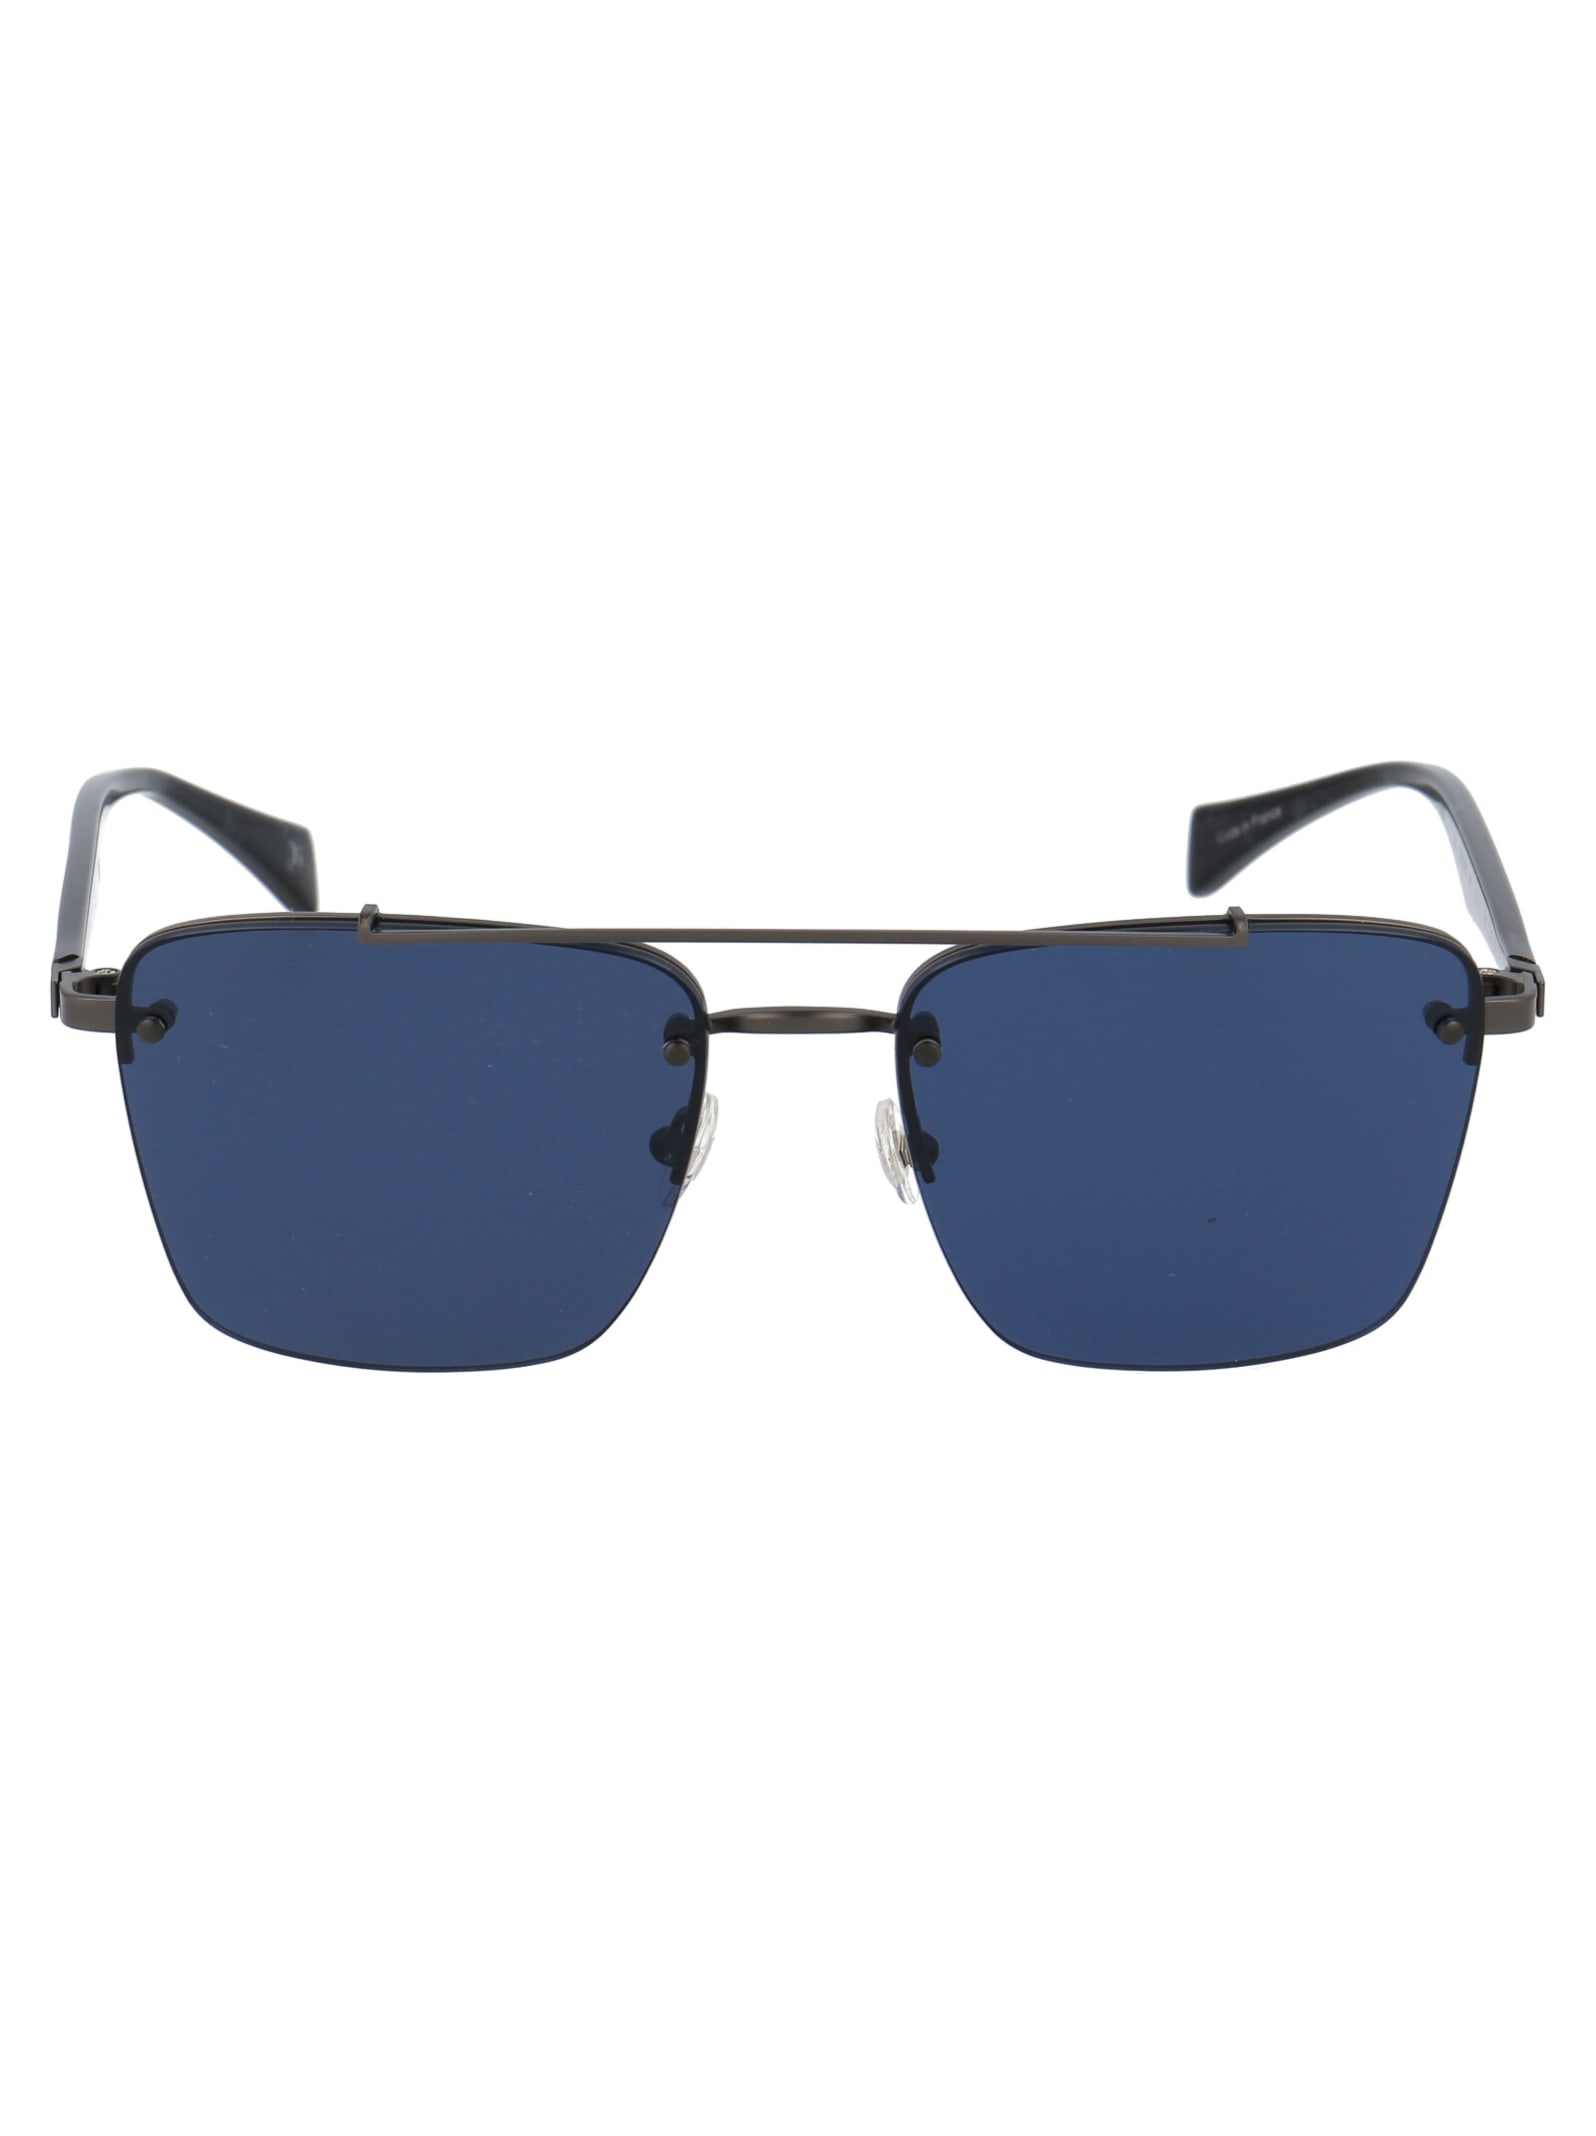 Yohji Yamamoto Ys7001 Sunglasses